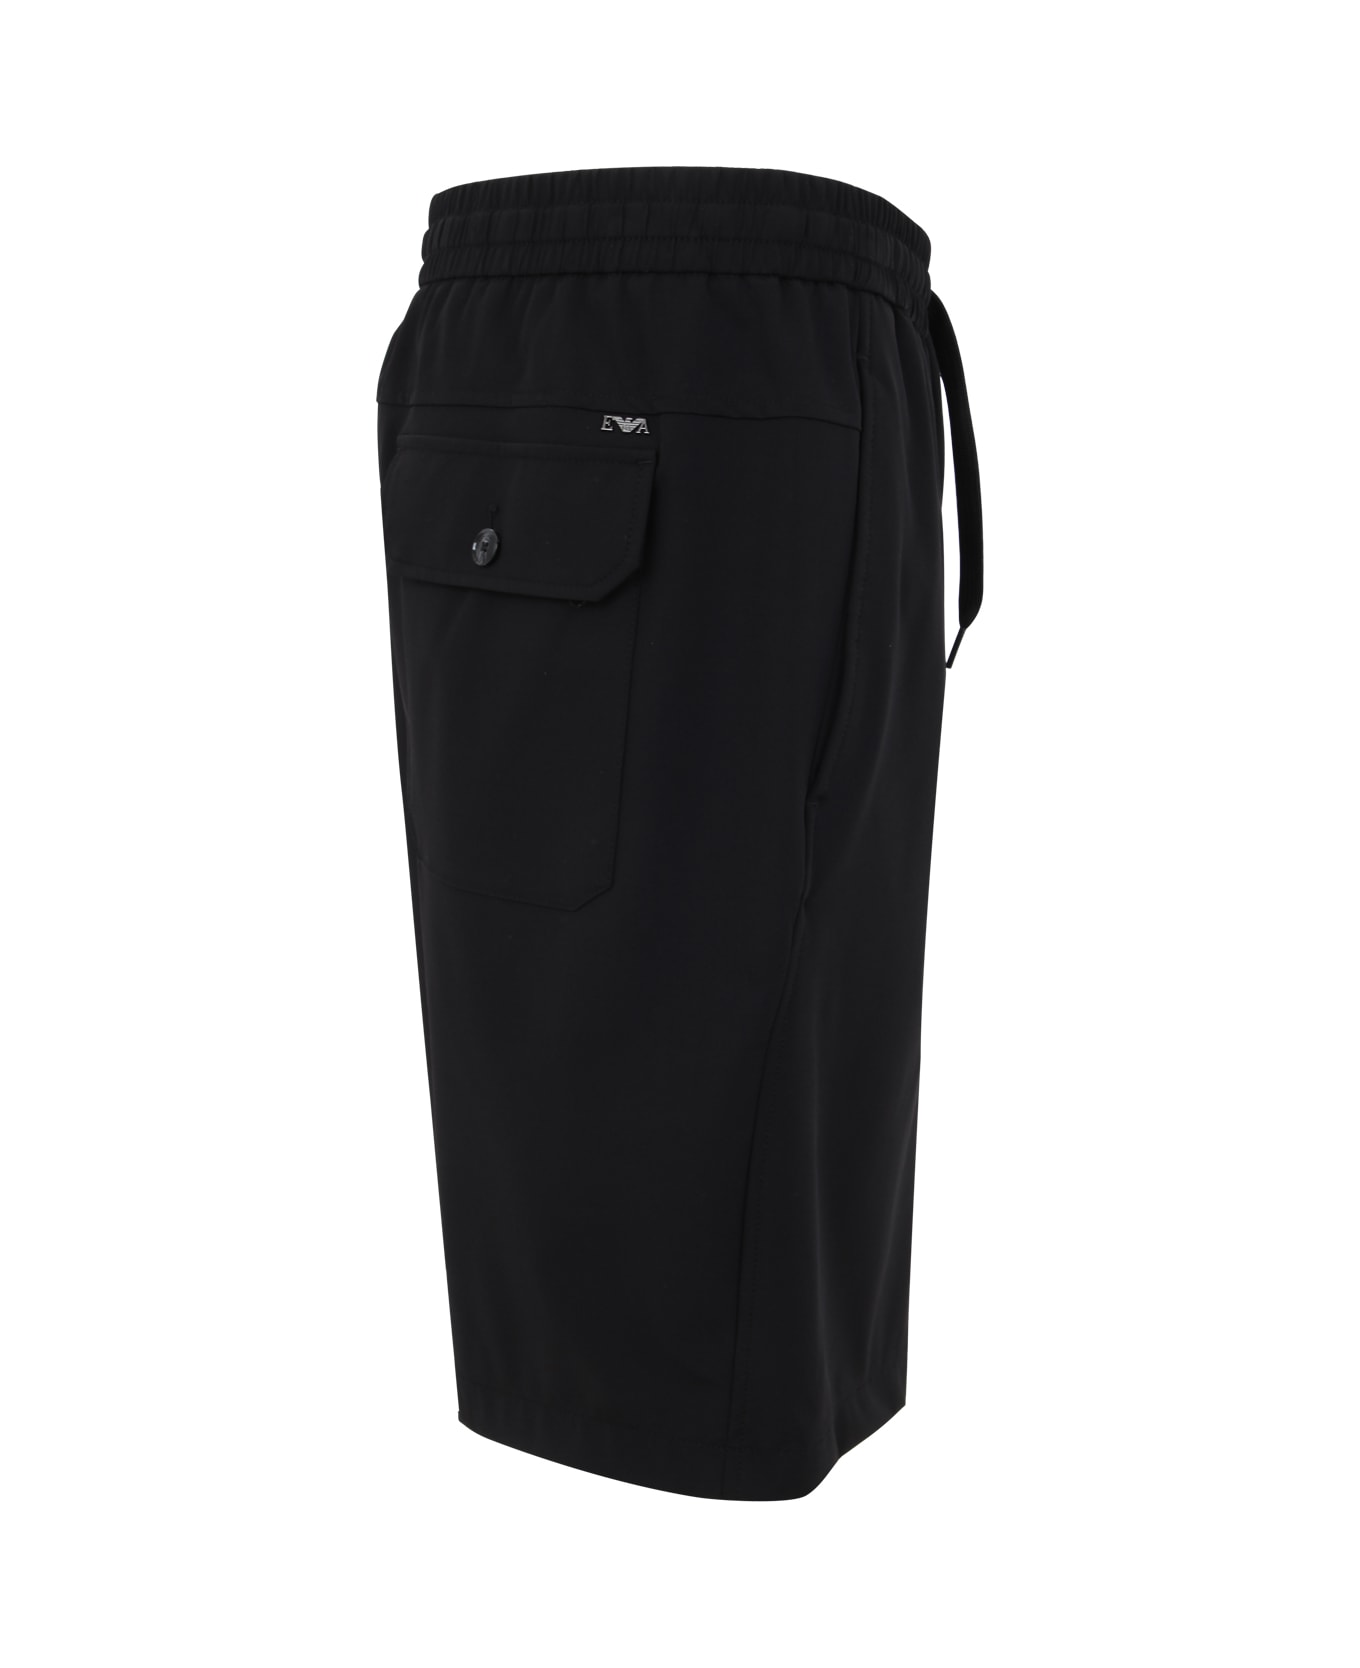 Emporio Armani Knitted Shorts - Black